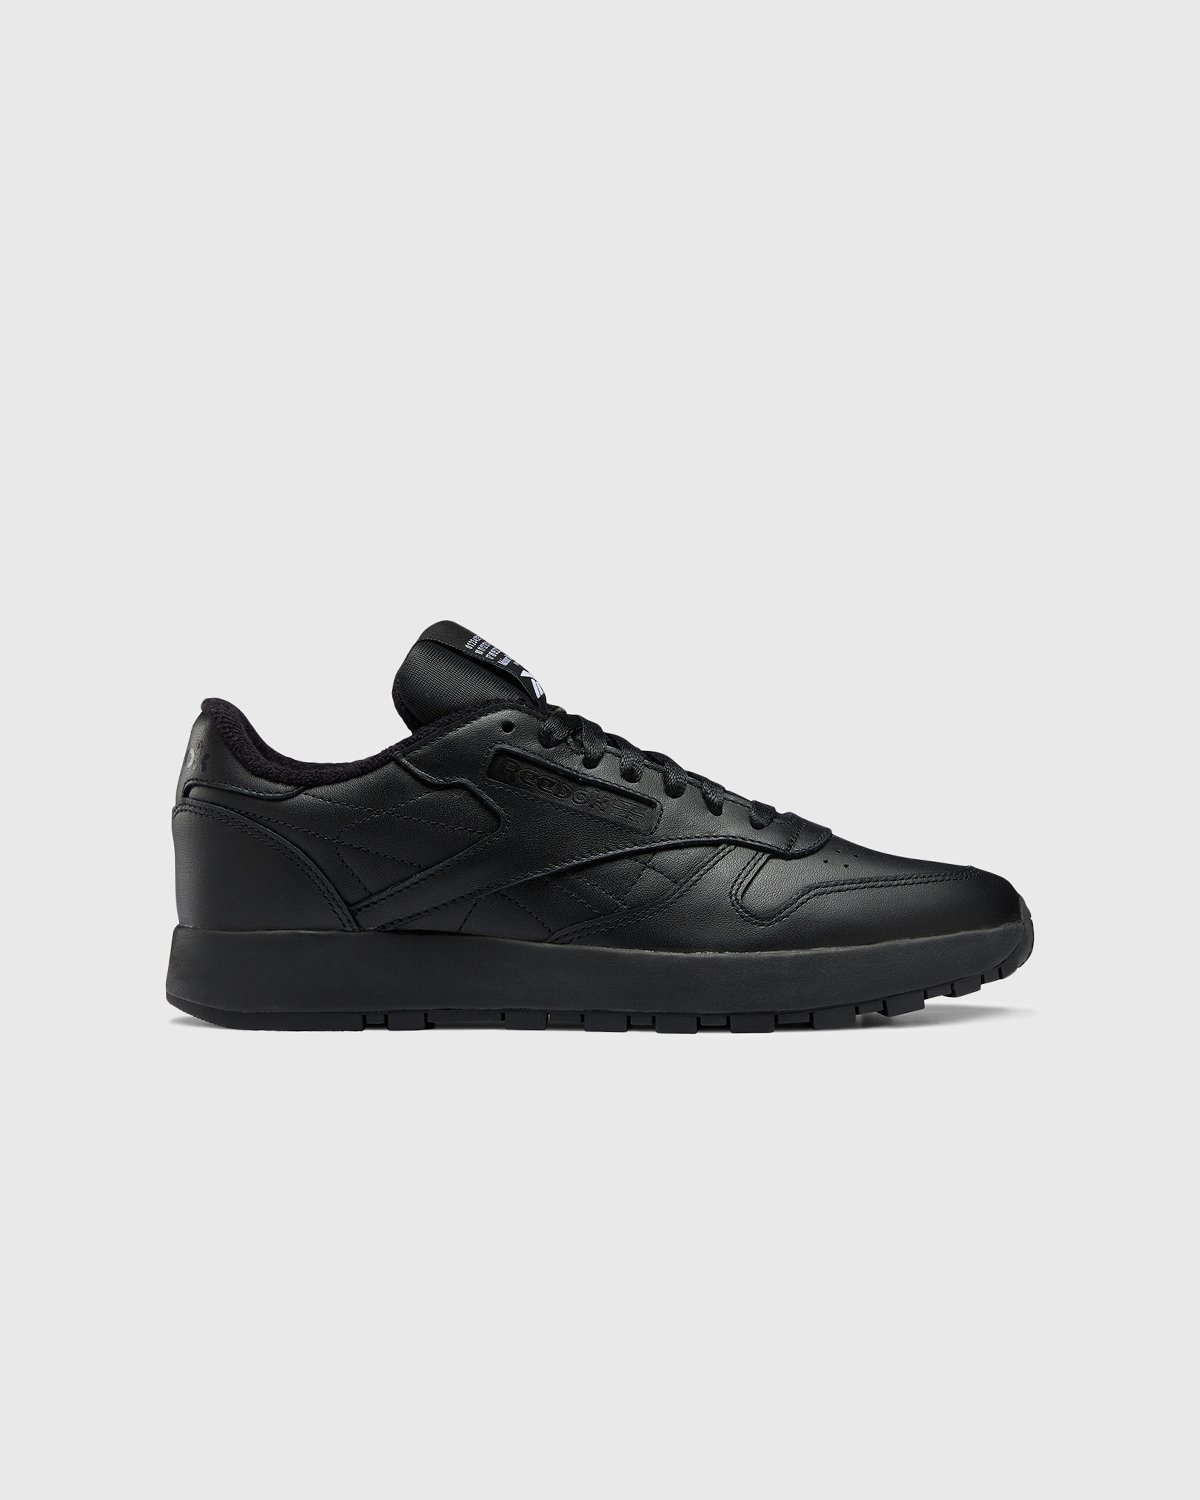 Maison Margiela x Reebok – Classic Leather Tabi Black - Low Top Sneakers - Black - Image 1